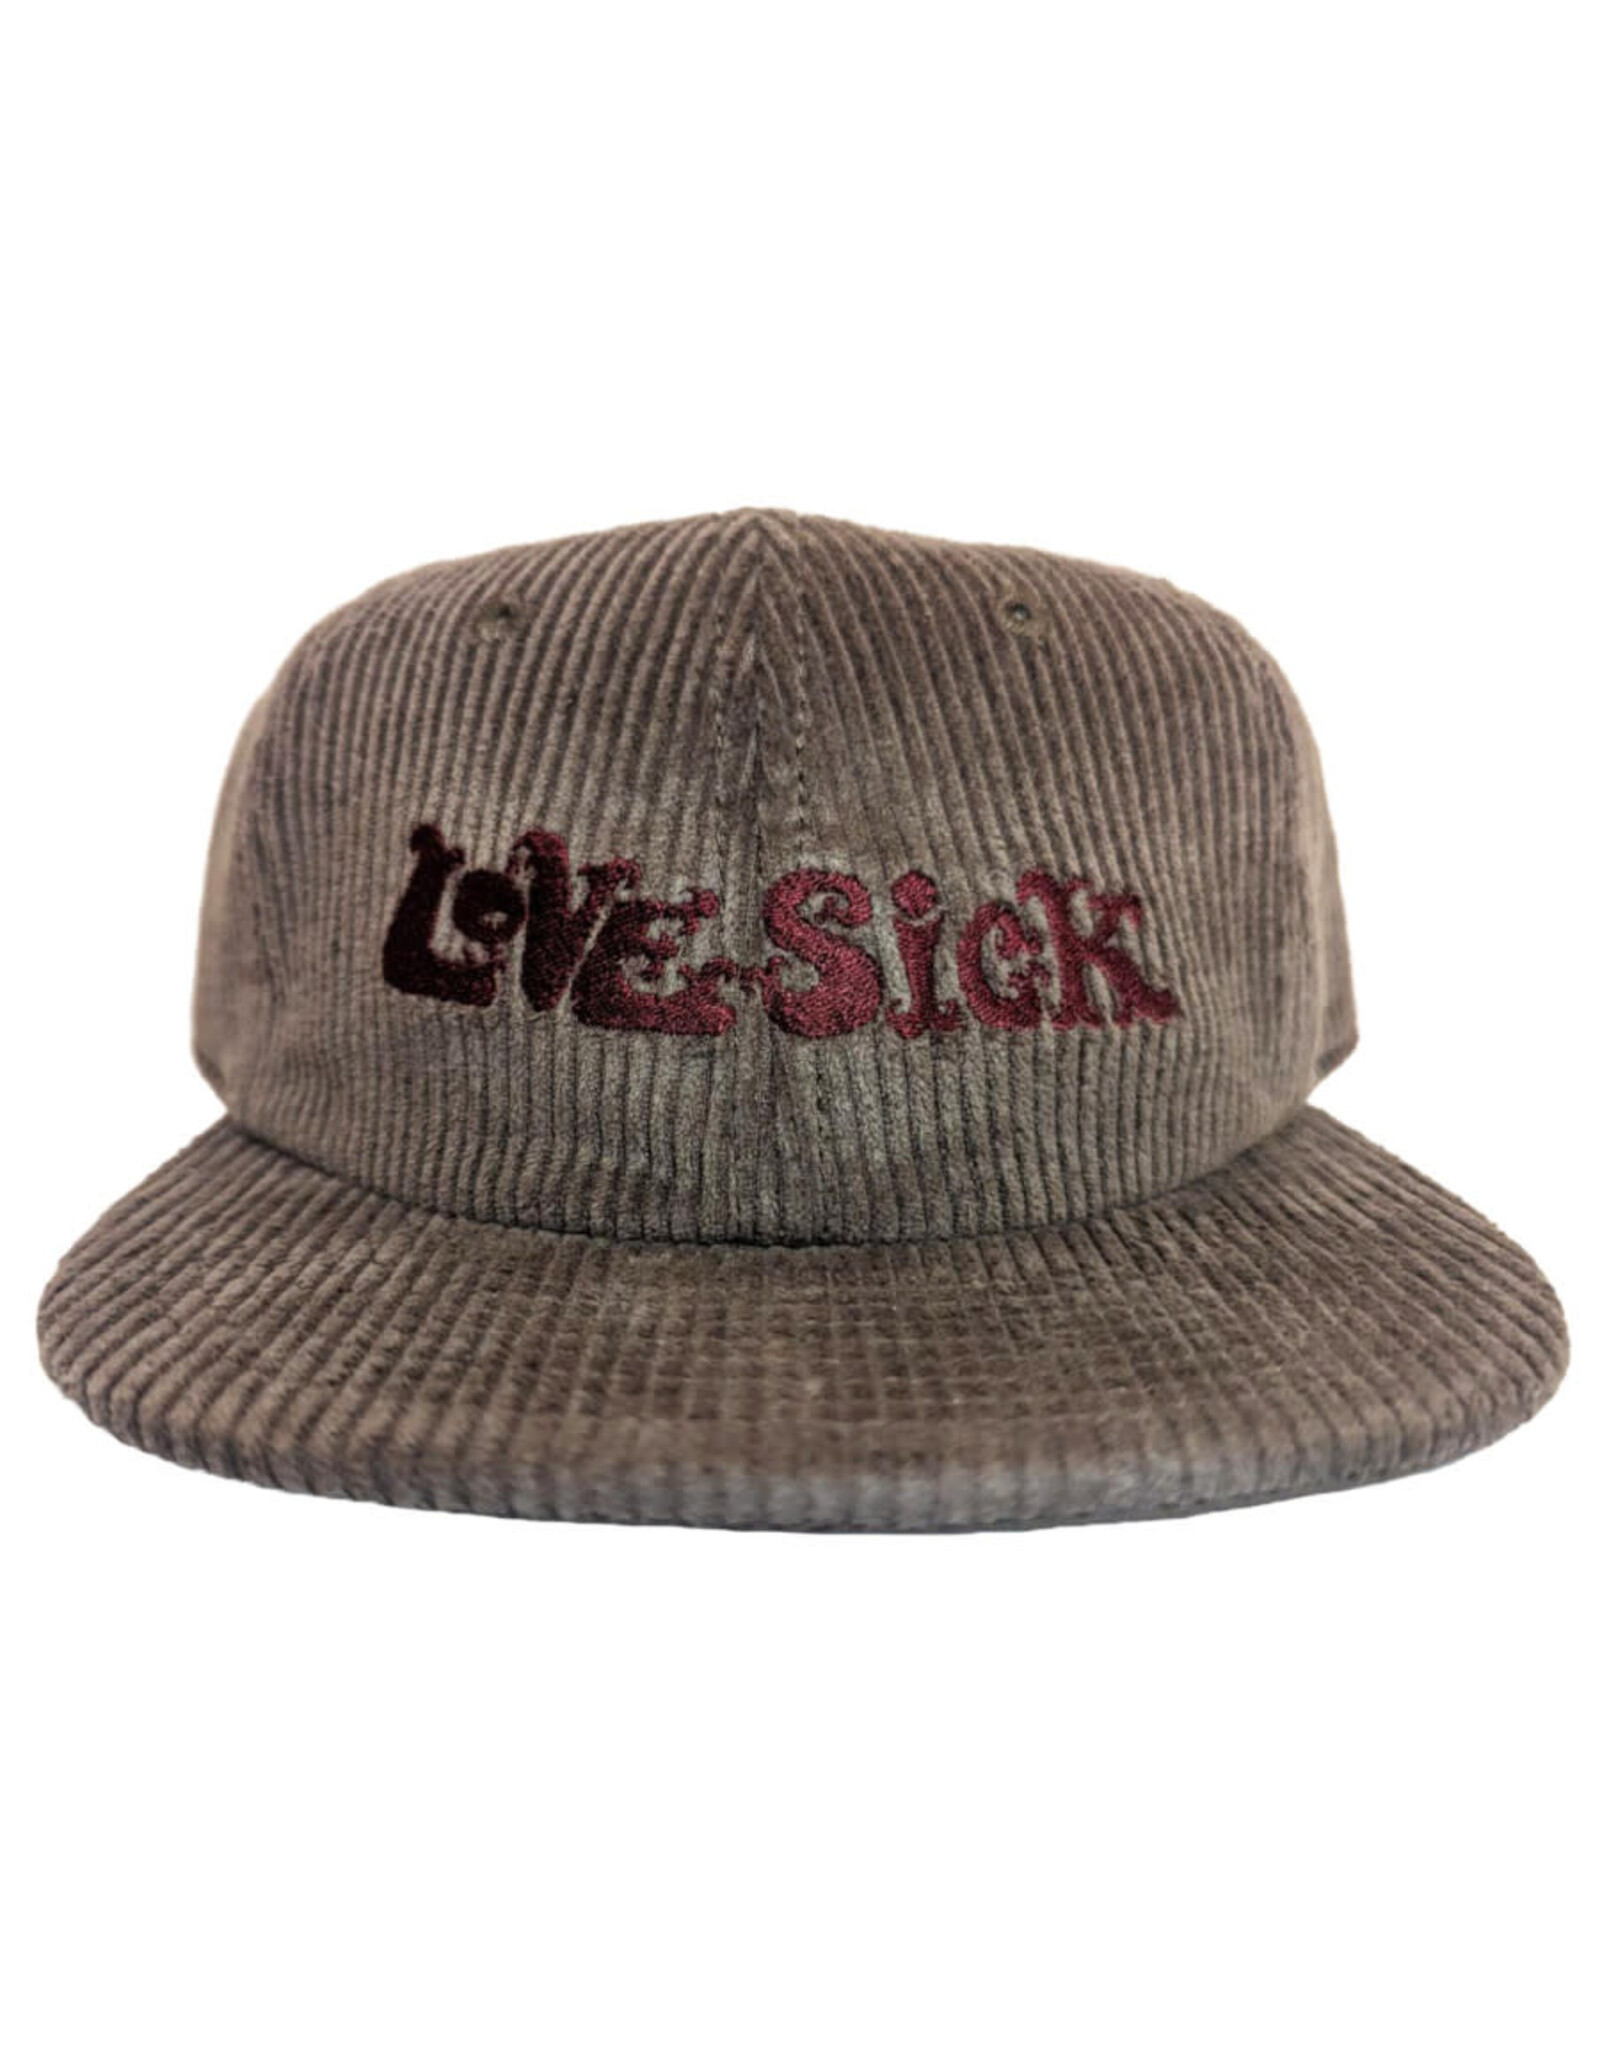 Lovesick Lovesick Hat Alone Again 6 Panel Cord Snapback (Walnut/Maroon)